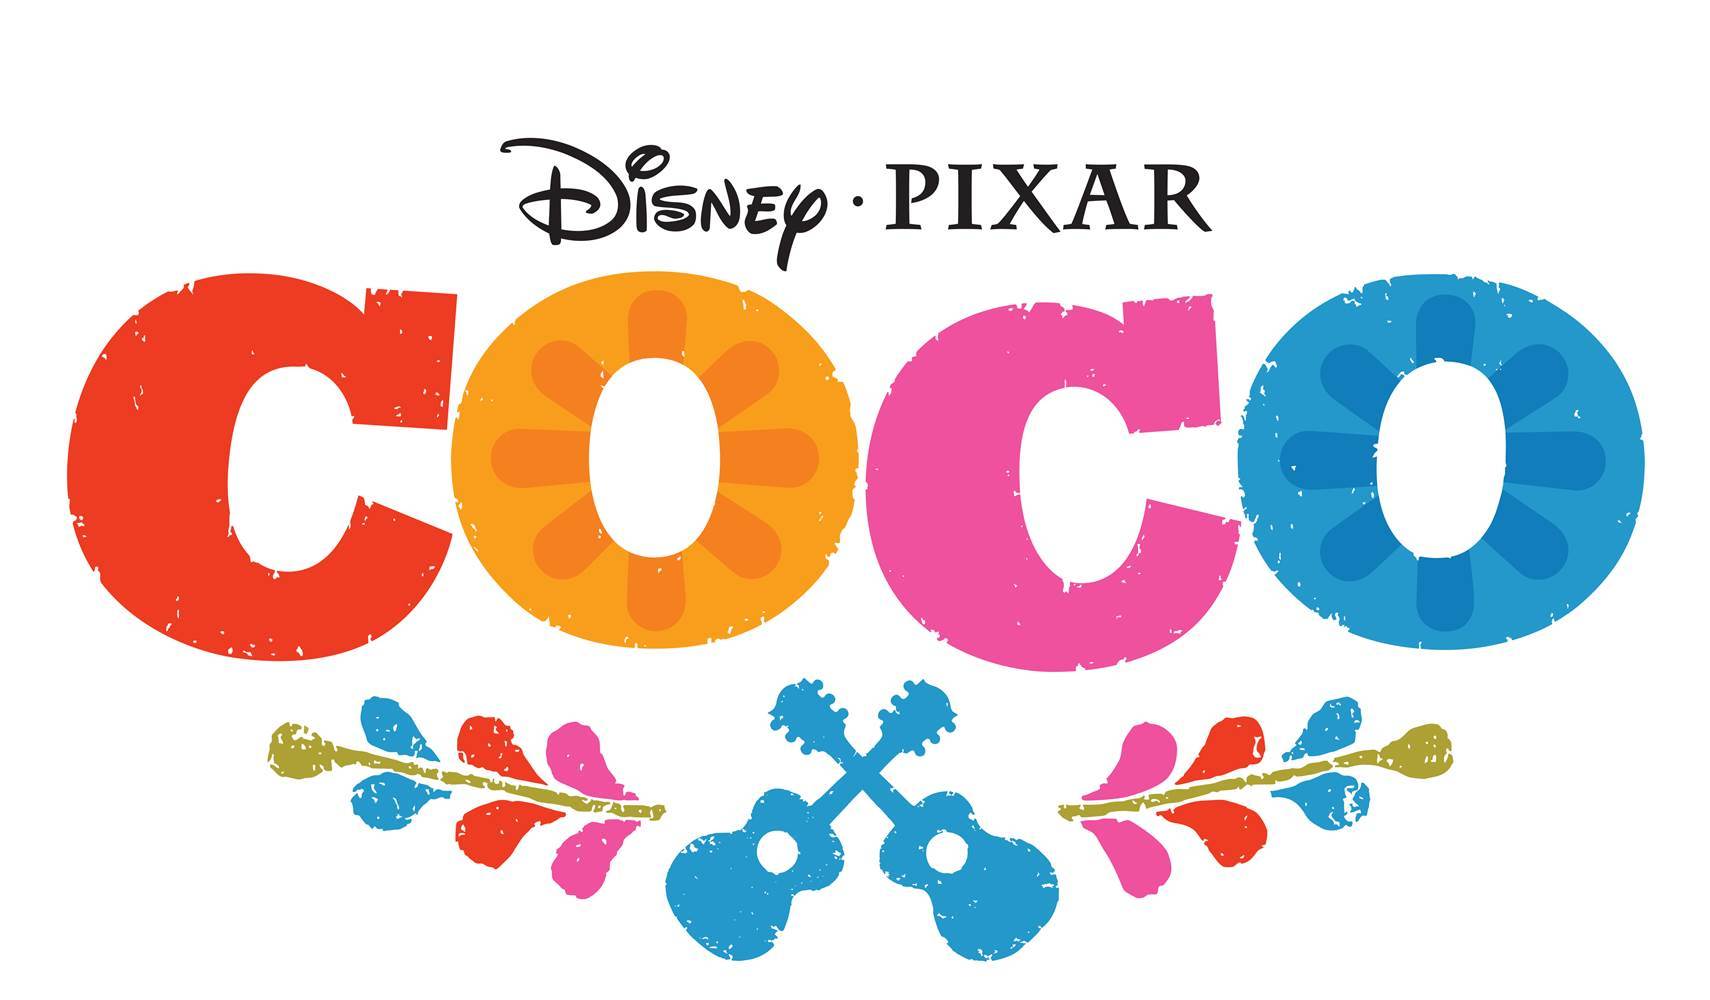 Disney-Pixar Coco Logo